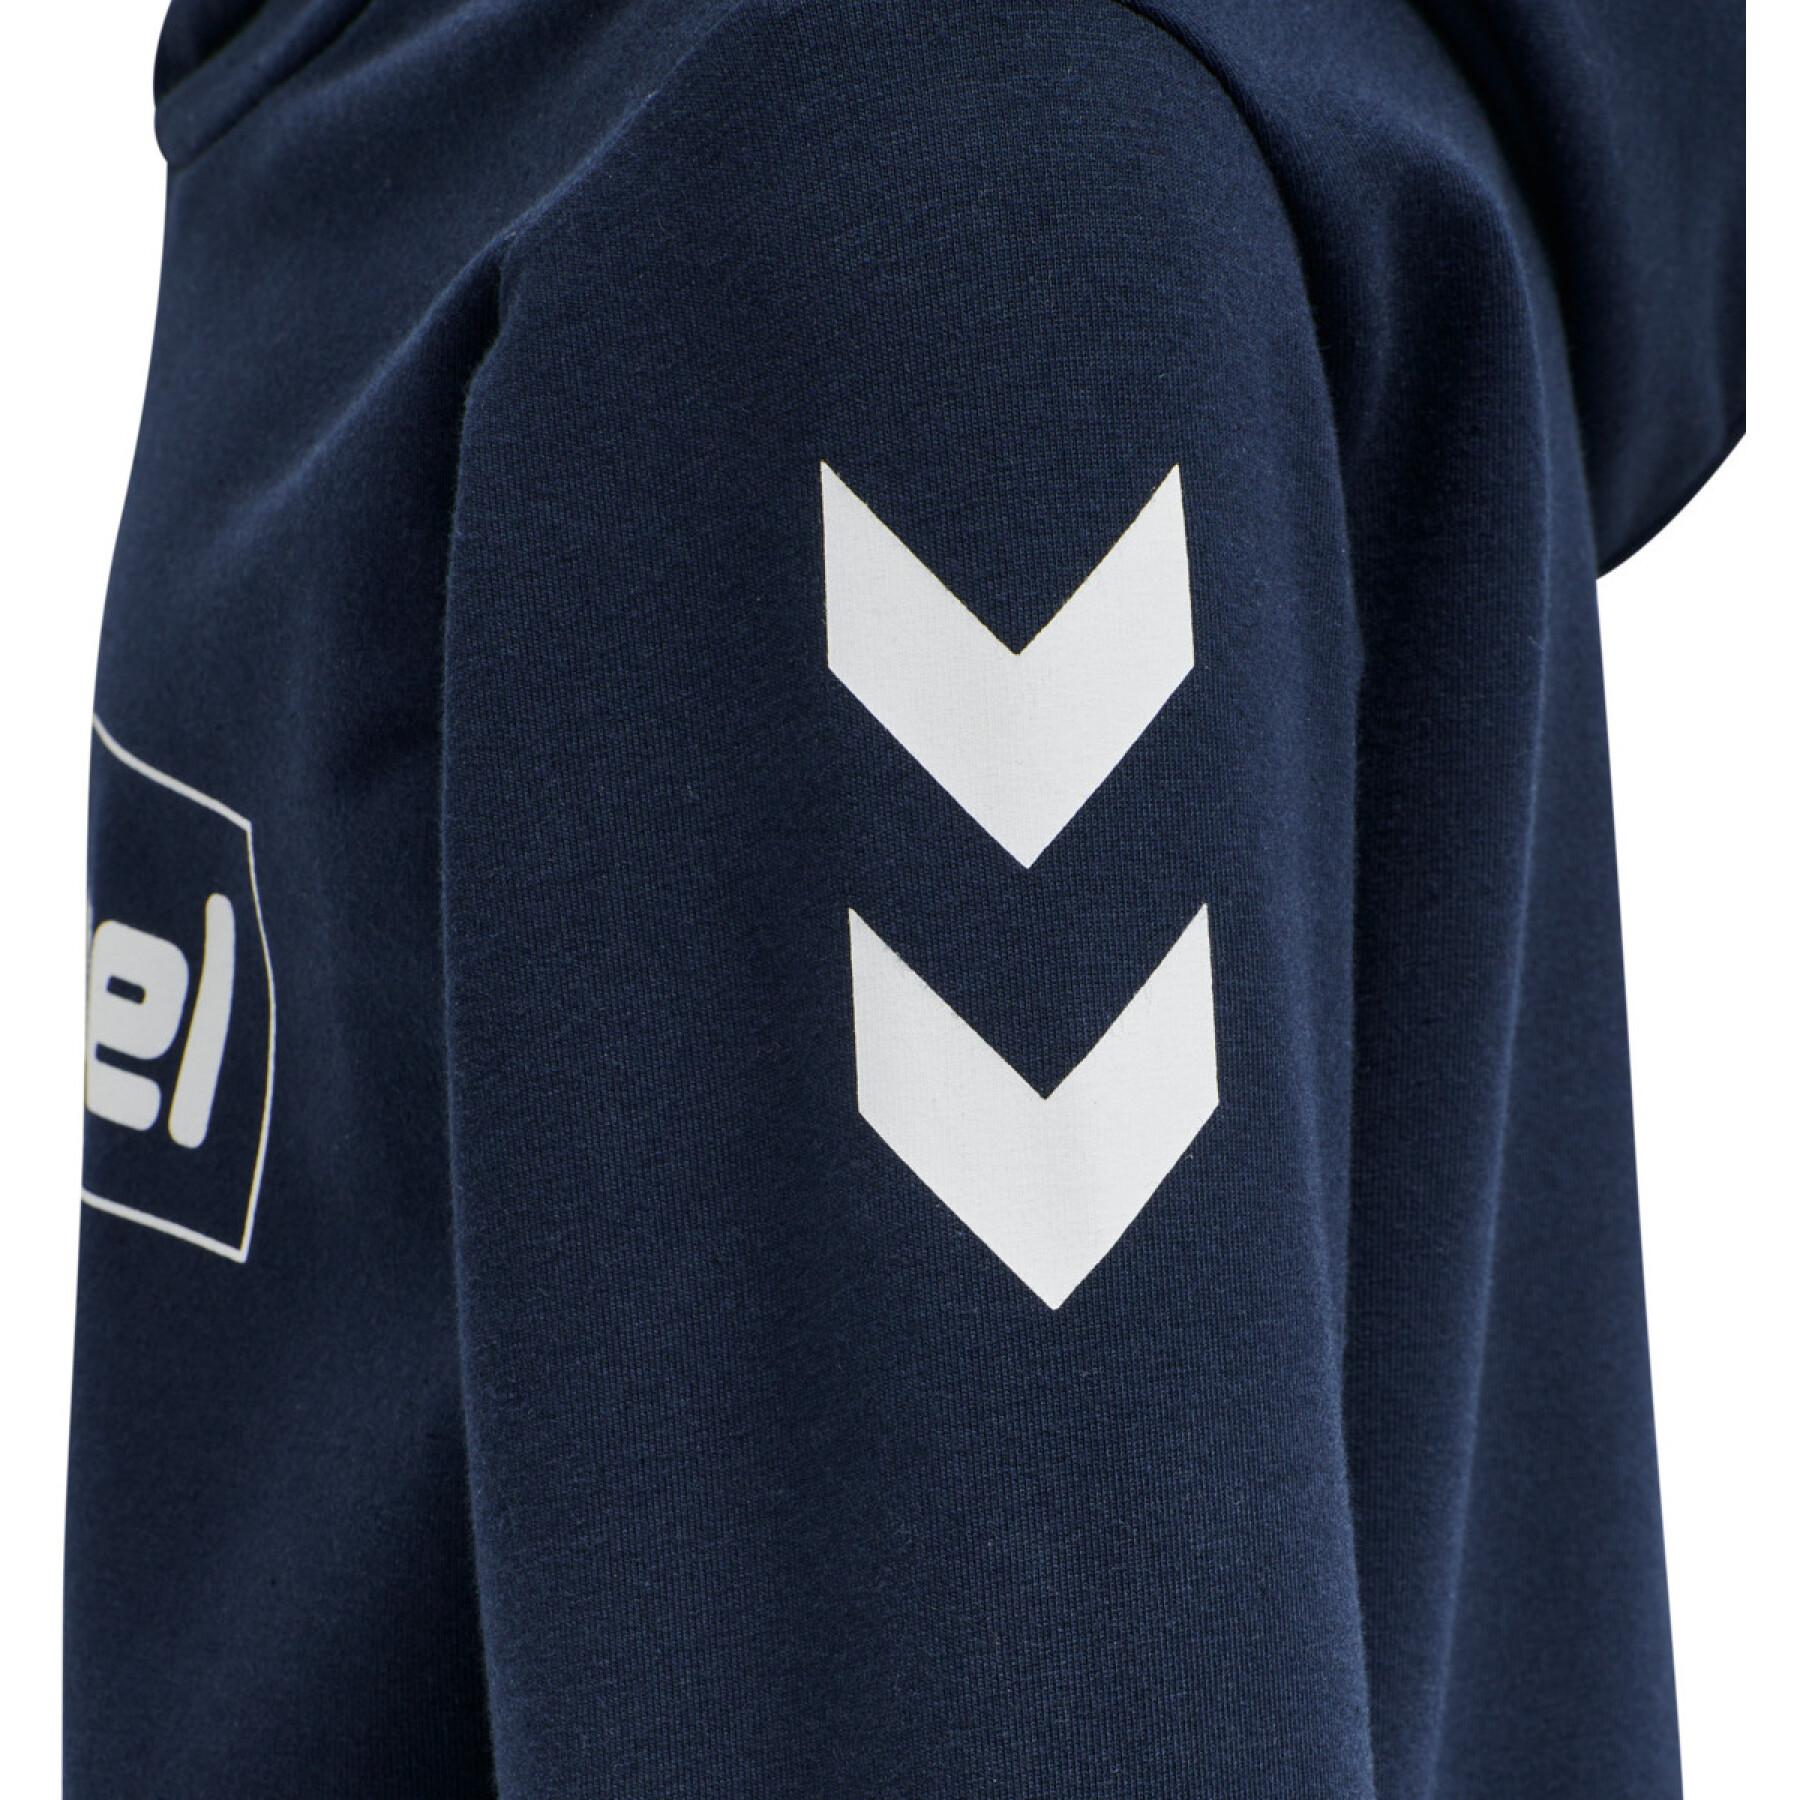 Child hoodie Hummel hmlBOX - Hummel - Sweats Sportswear - Sweats & Hoodies | Sweatshirts